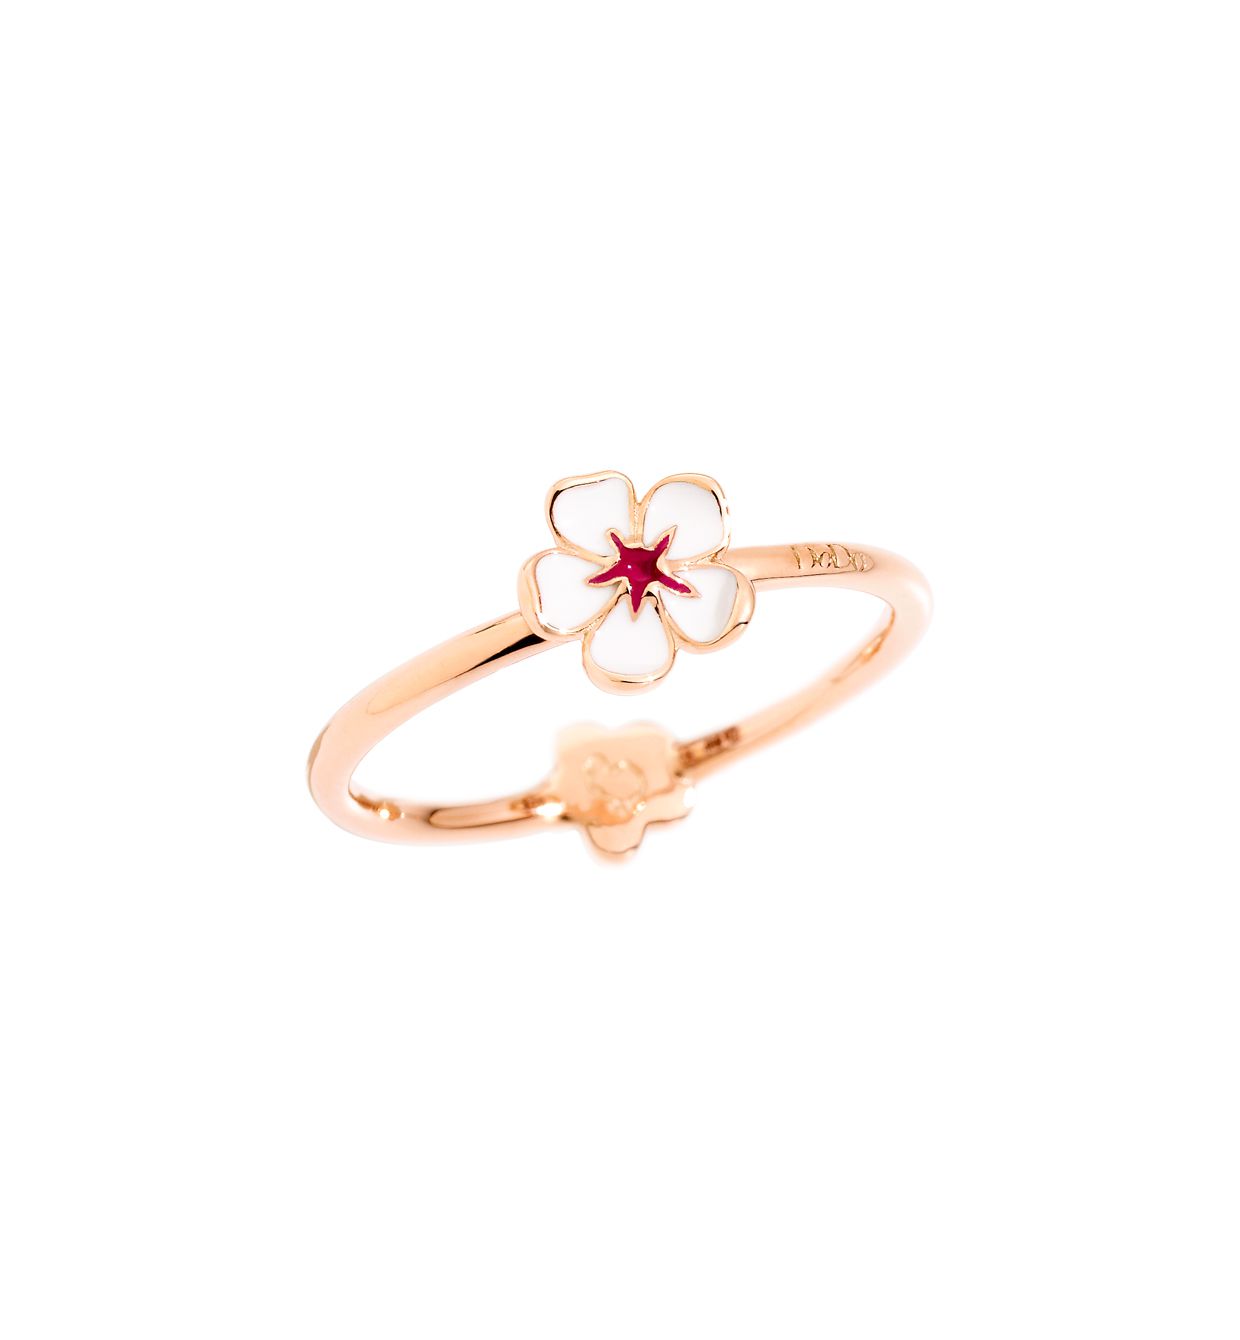 DoDo Ring Cherry Blossom in 9k Rose Gold with White Enamel - Orsini Jewellers NZ